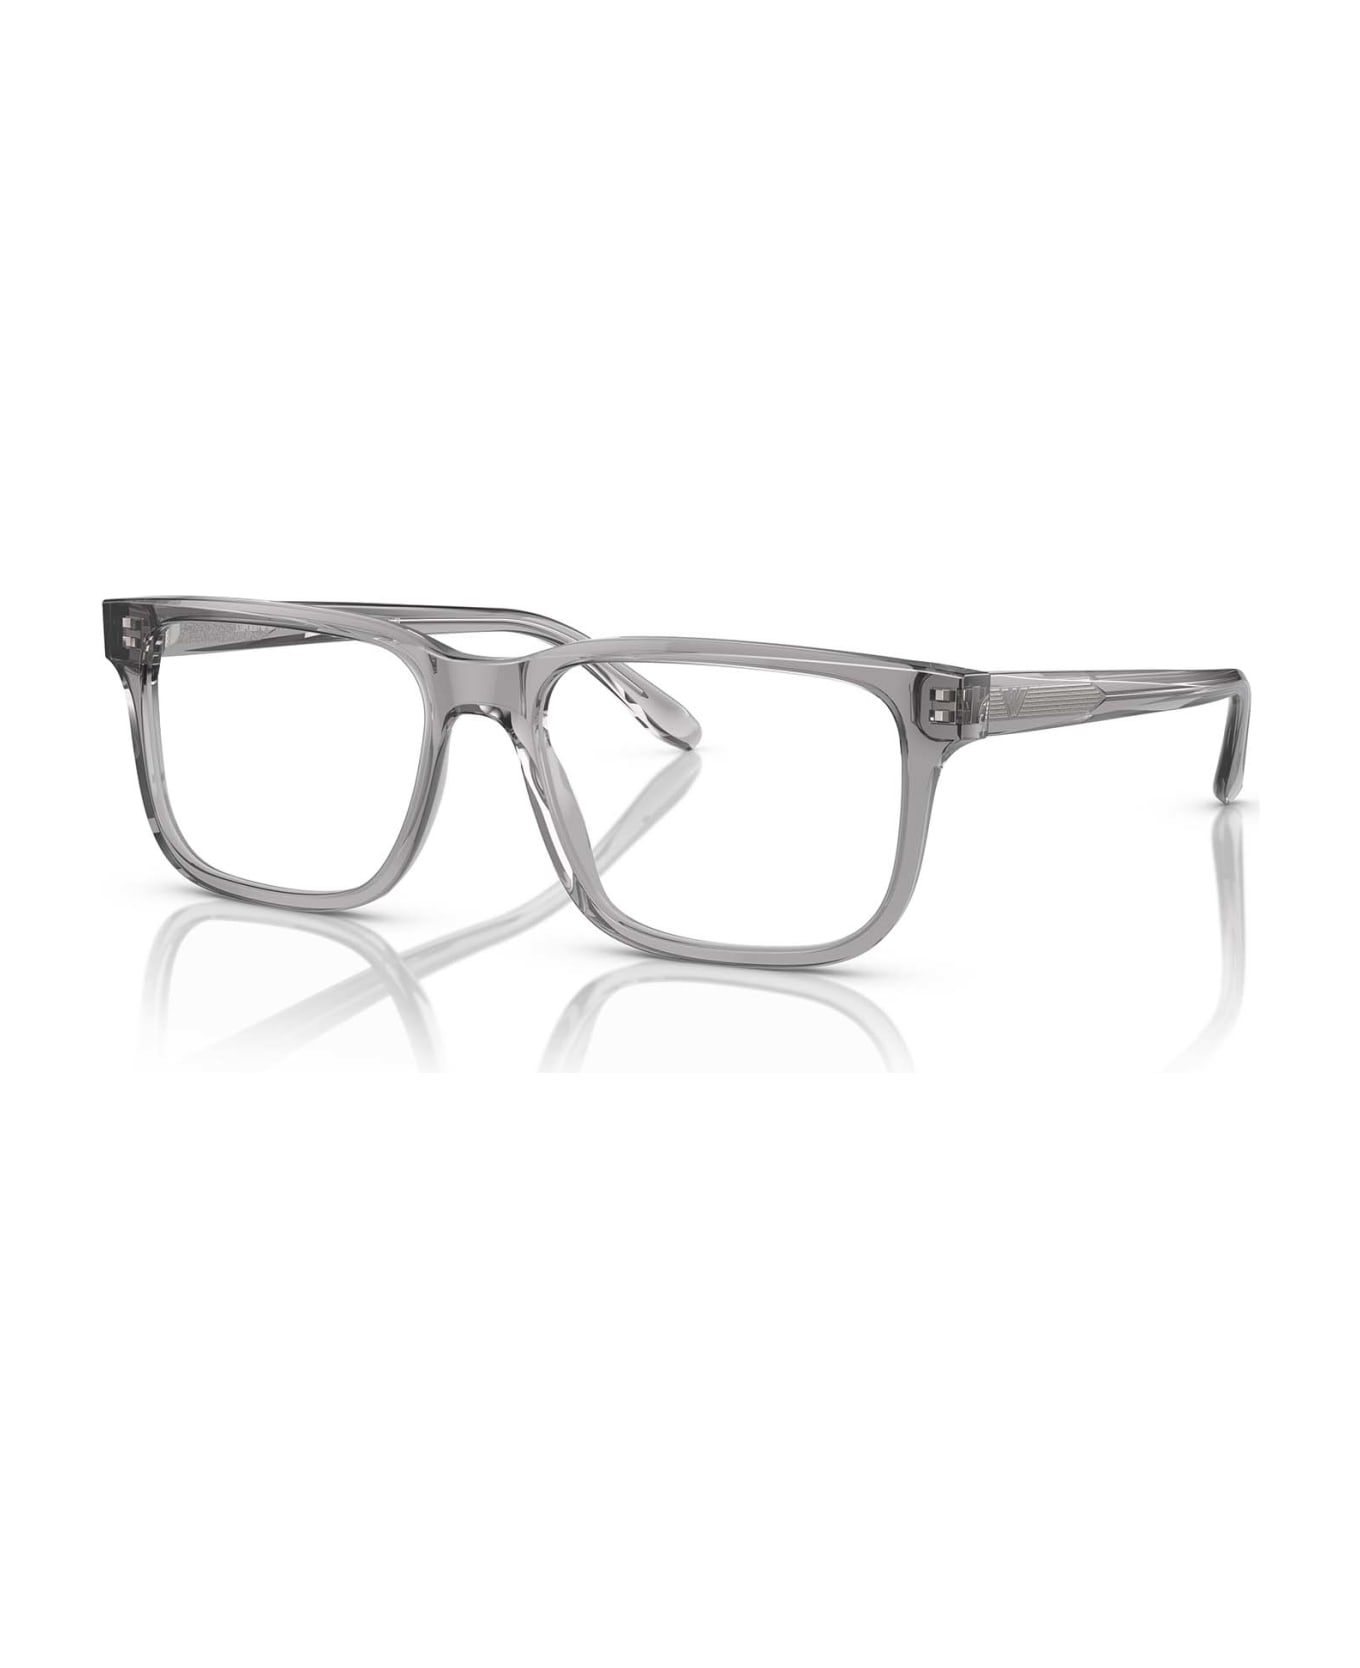 Emporio Armani Ea3218 Shiny Transparent Grey Glasses - Shiny Transparent Grey アイウェア